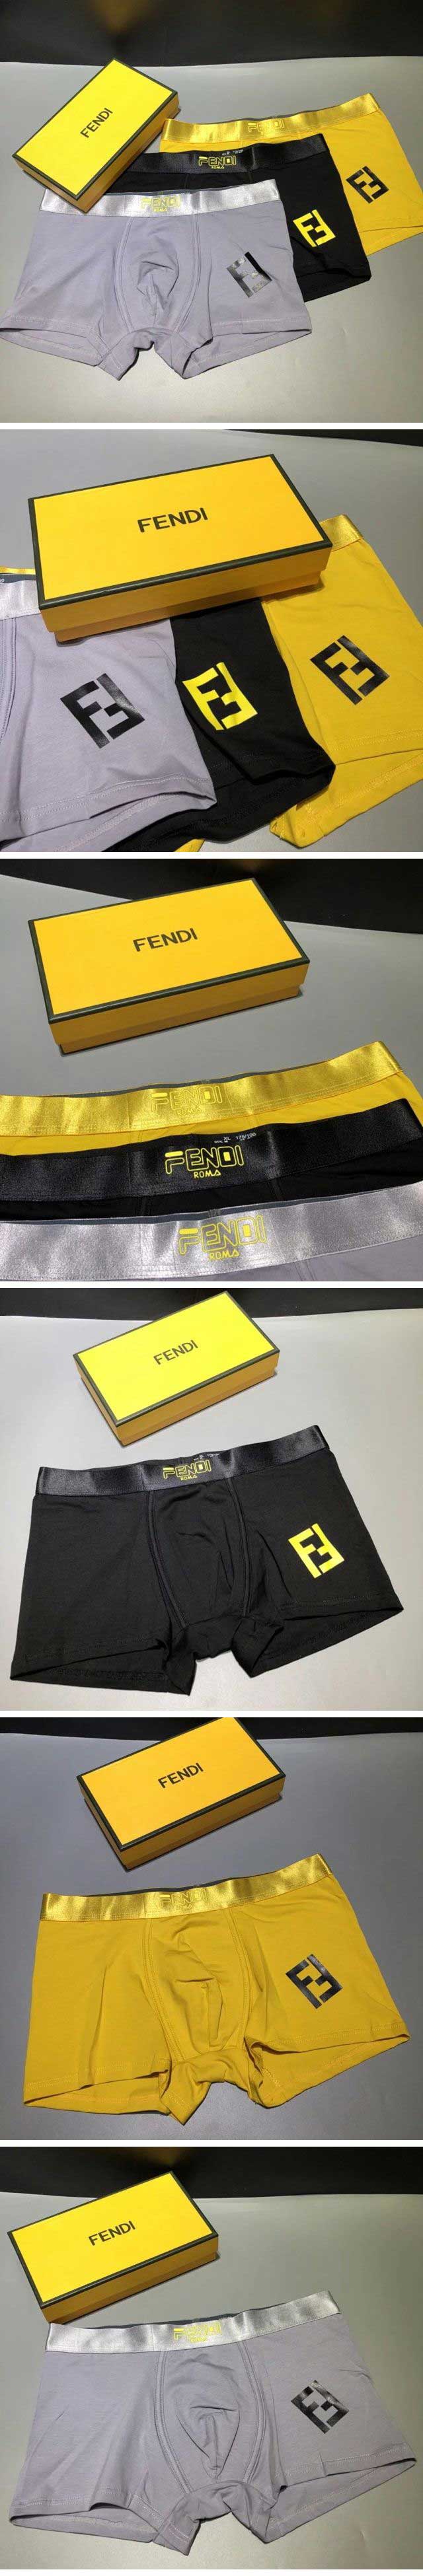 Fendi Boxer Pants フェンディー ボクサー パンツ